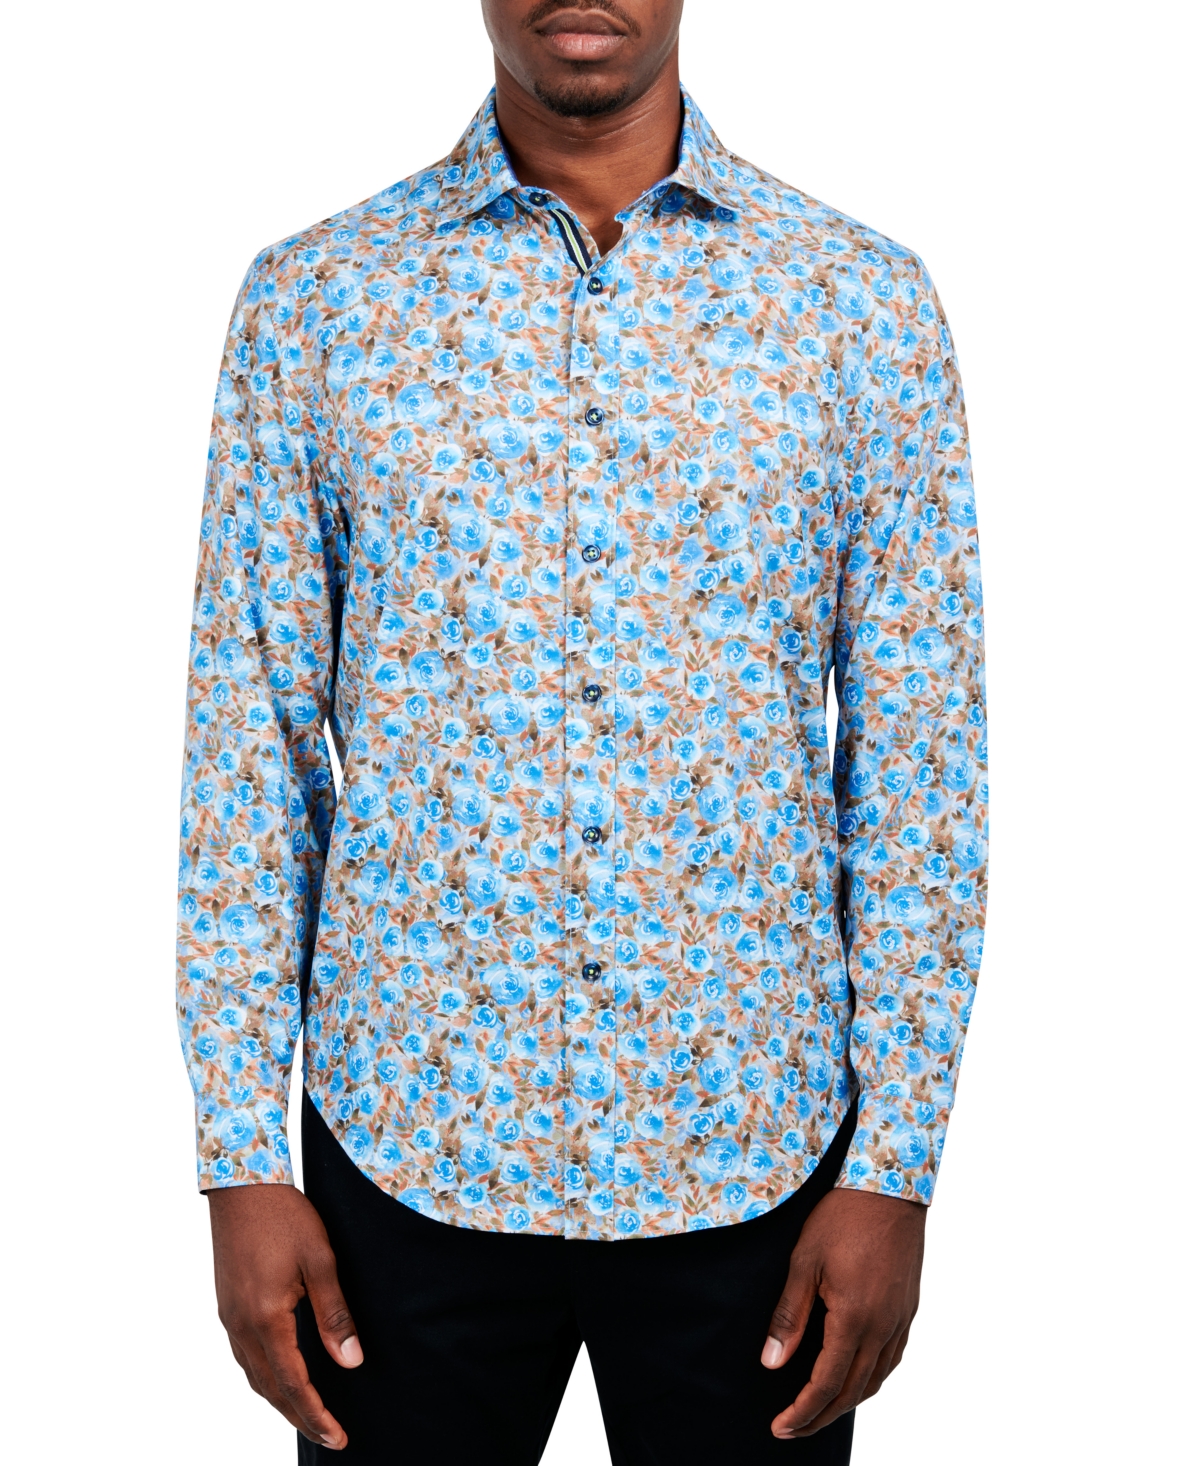 Men's Slim-Fit Performance Stretch Floral Print Long-Sleeve Button-Down Shirt - Multi